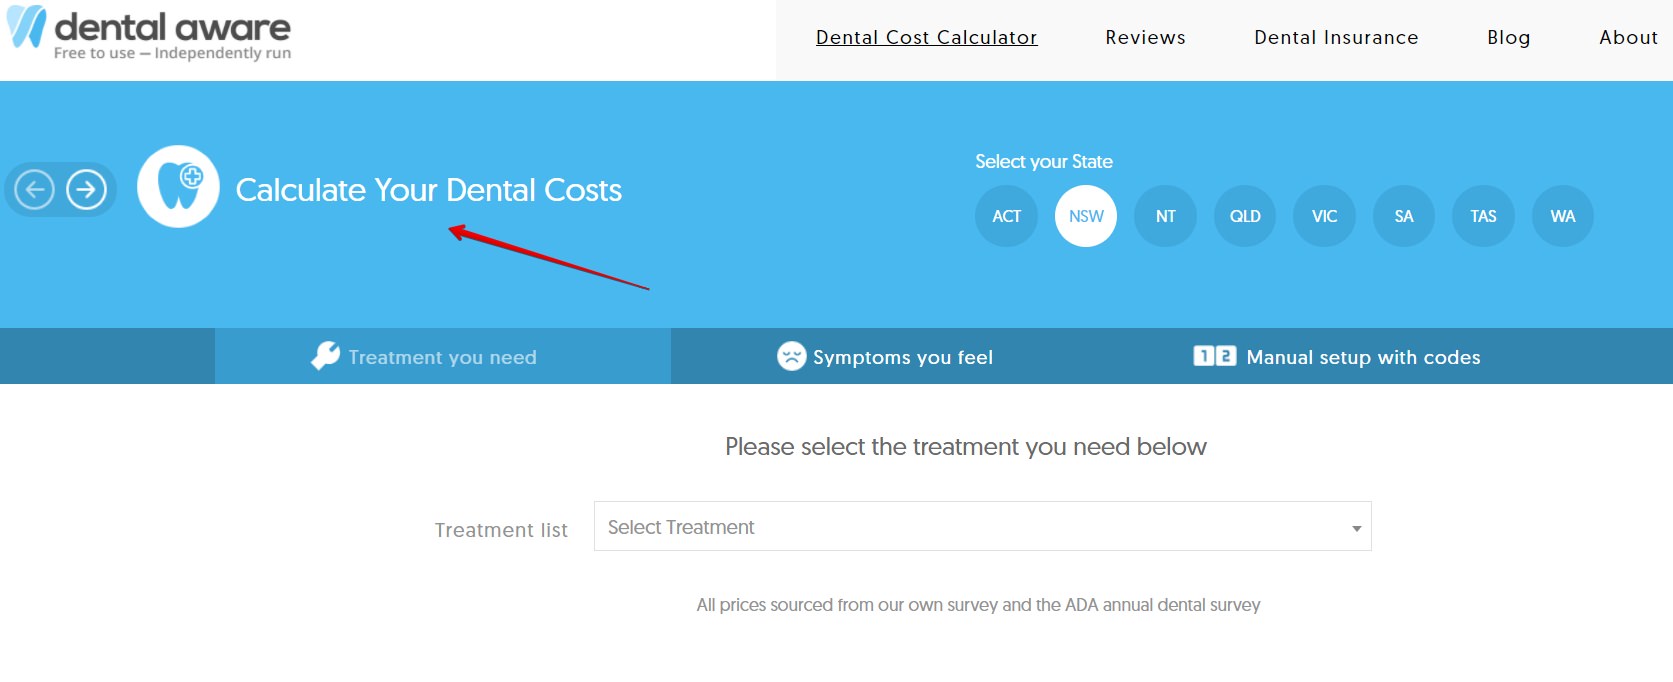 Dental Cost Calculator by Dental Aware